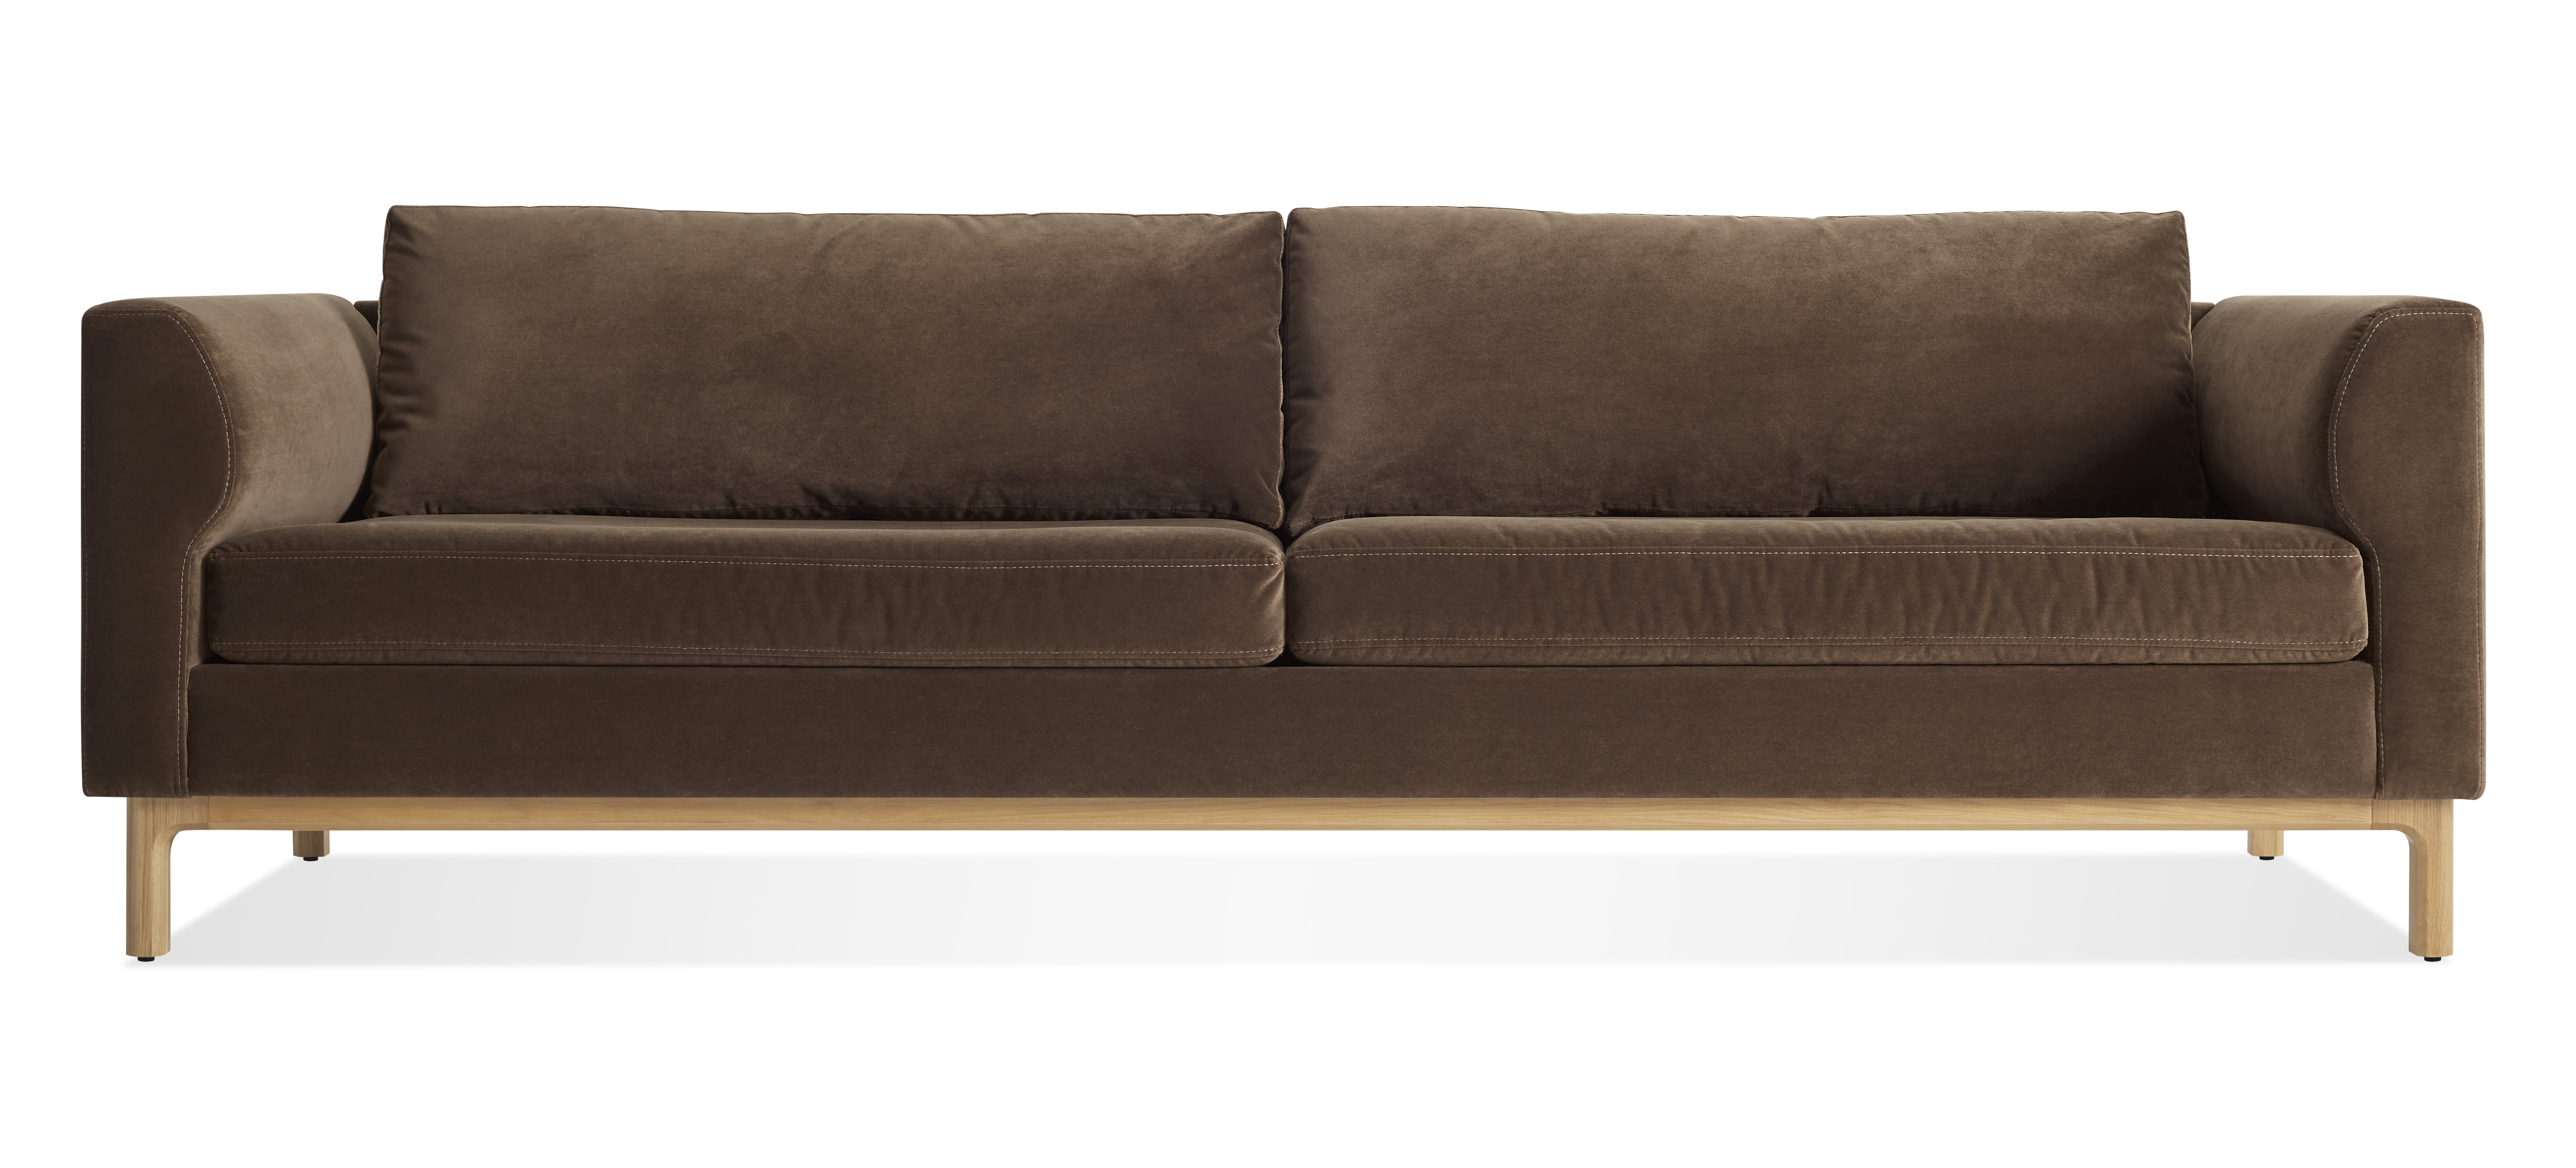 Puff Puff Sofa  Sofa upholstery, Blu dot sofa, Sofa furniture